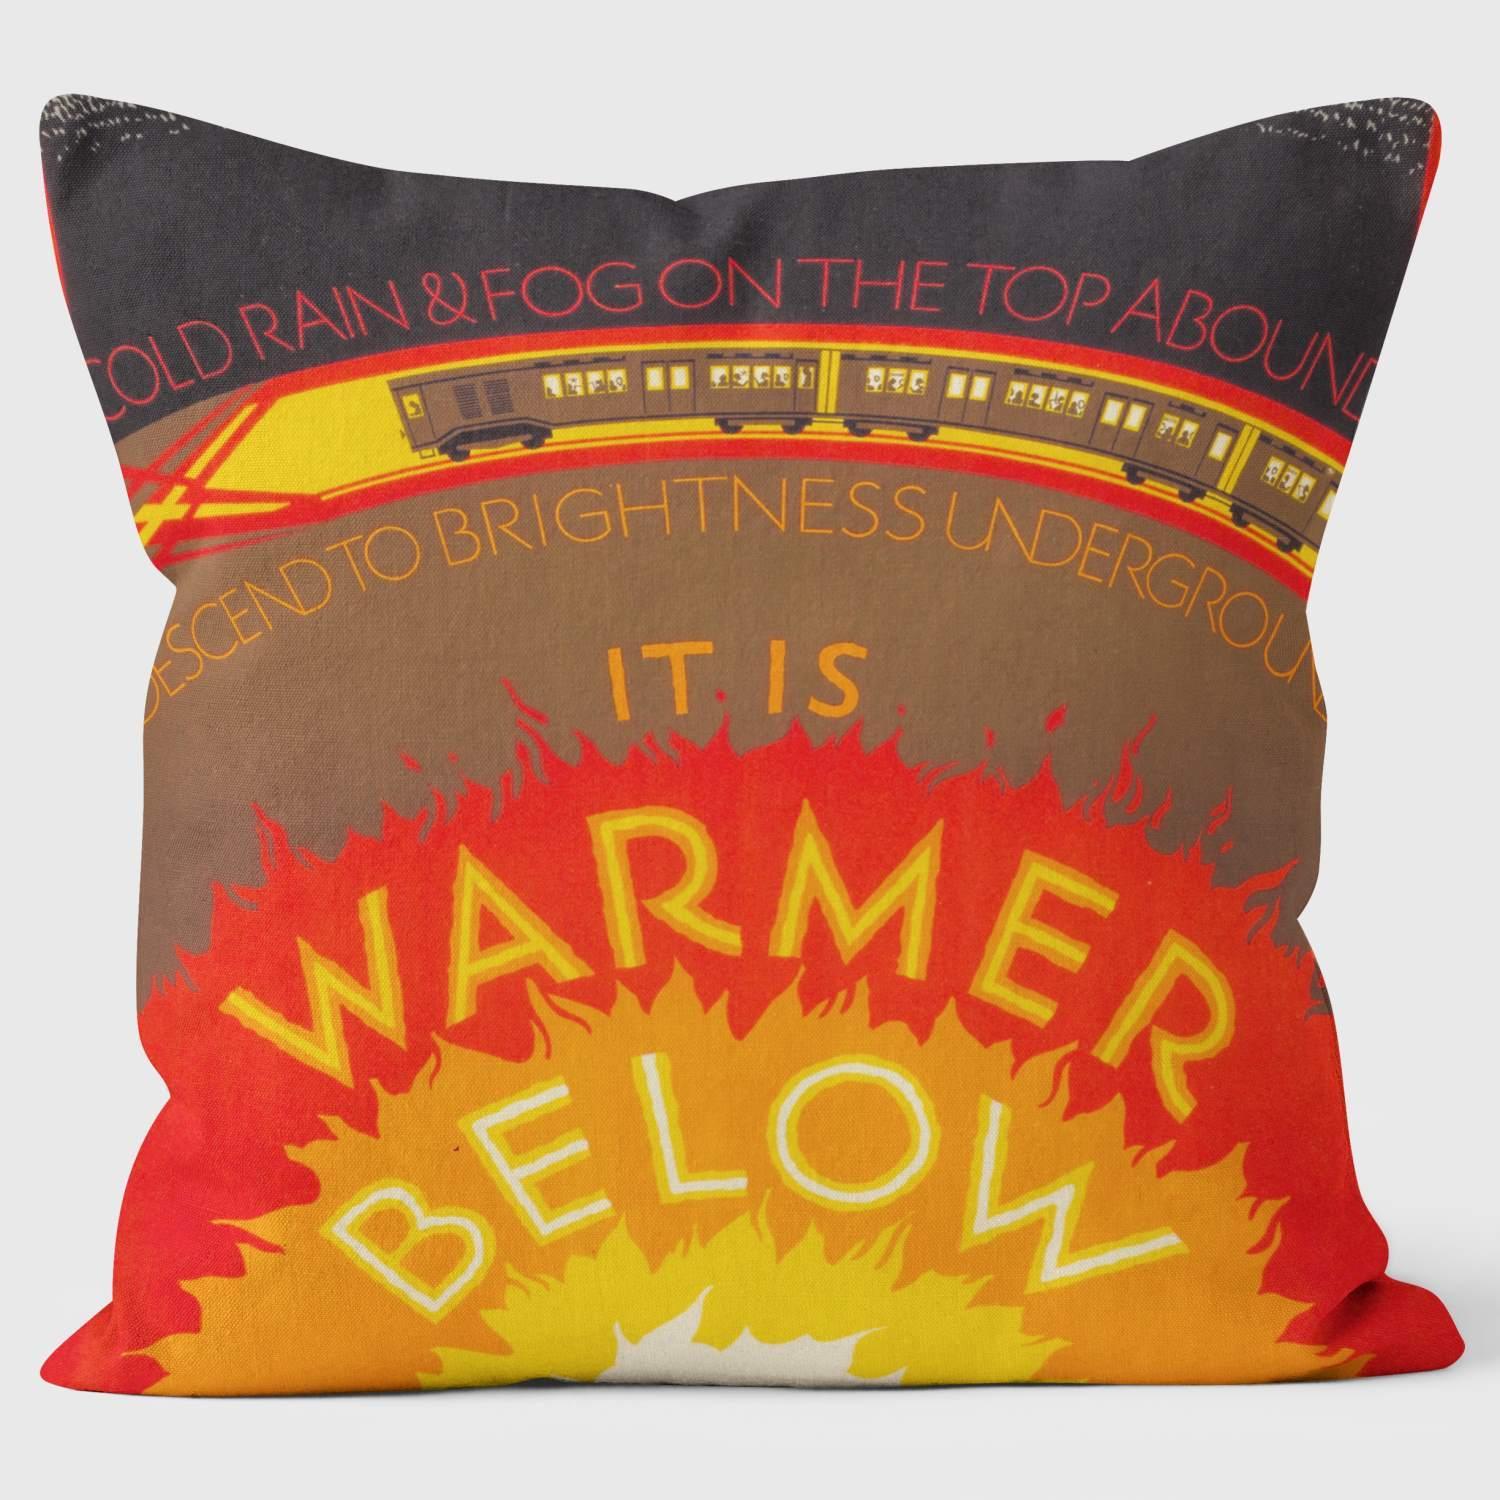 It's Warmer Below - London Transport Cushion - Handmade Cushions UK - WeLoveCushions